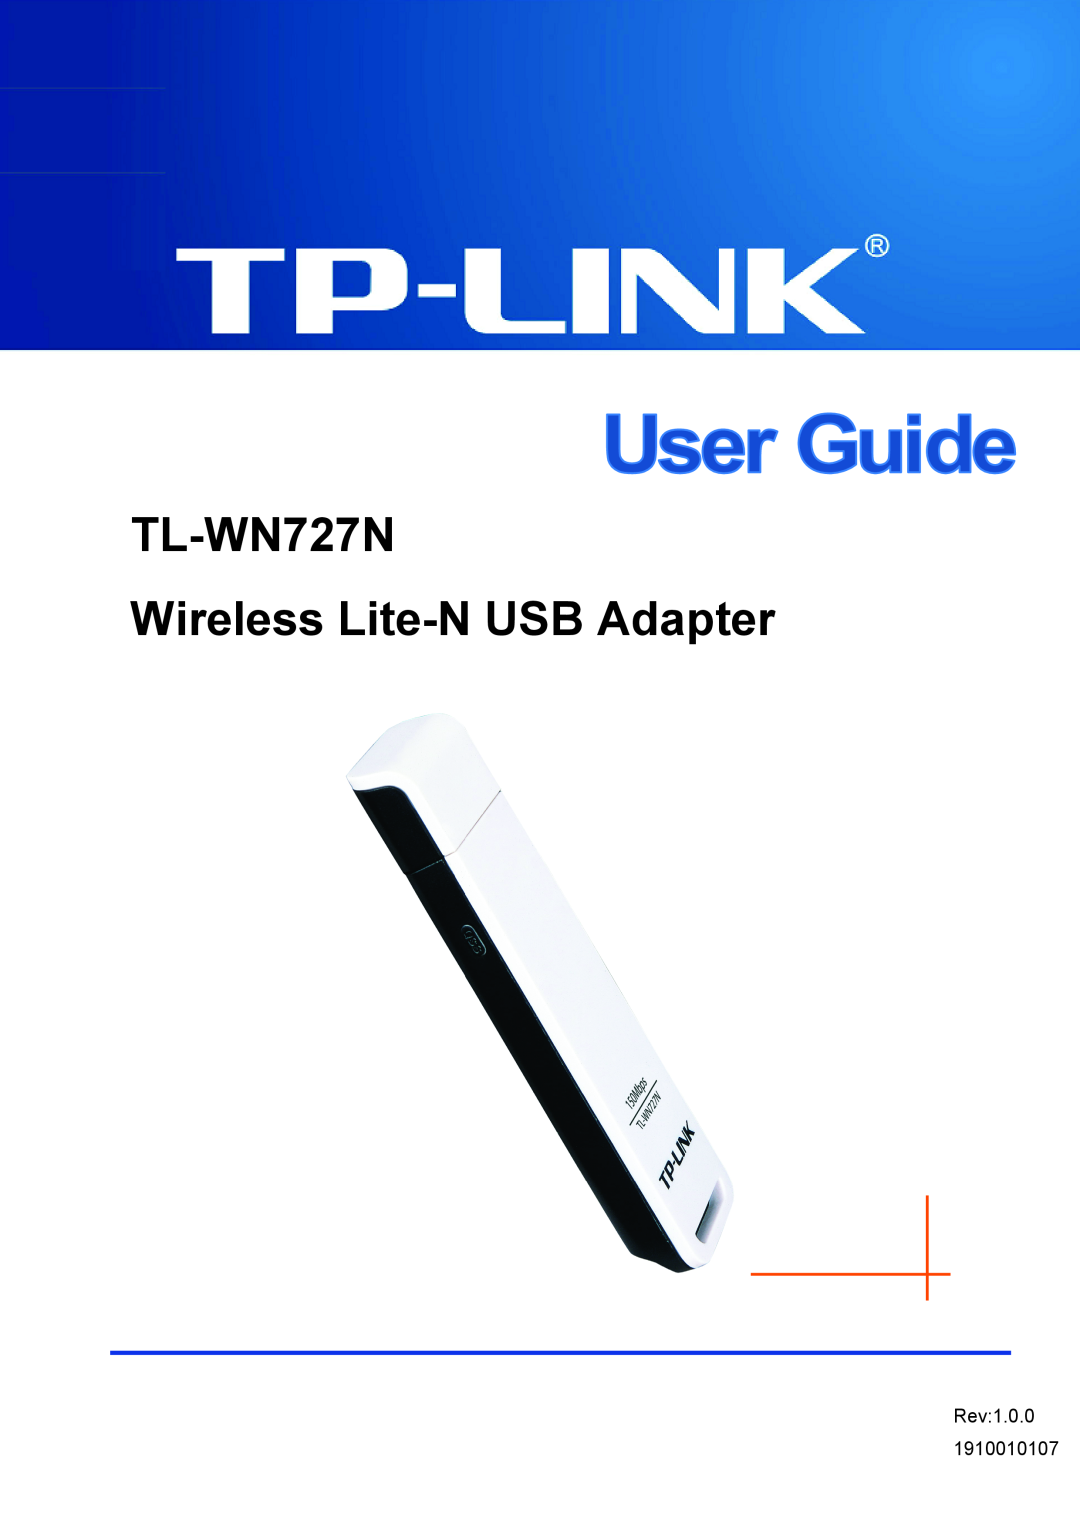 Vizio manual TL-WN727N Wireless Lite-N USB Adapter, Rev1.0.0 1910010107 